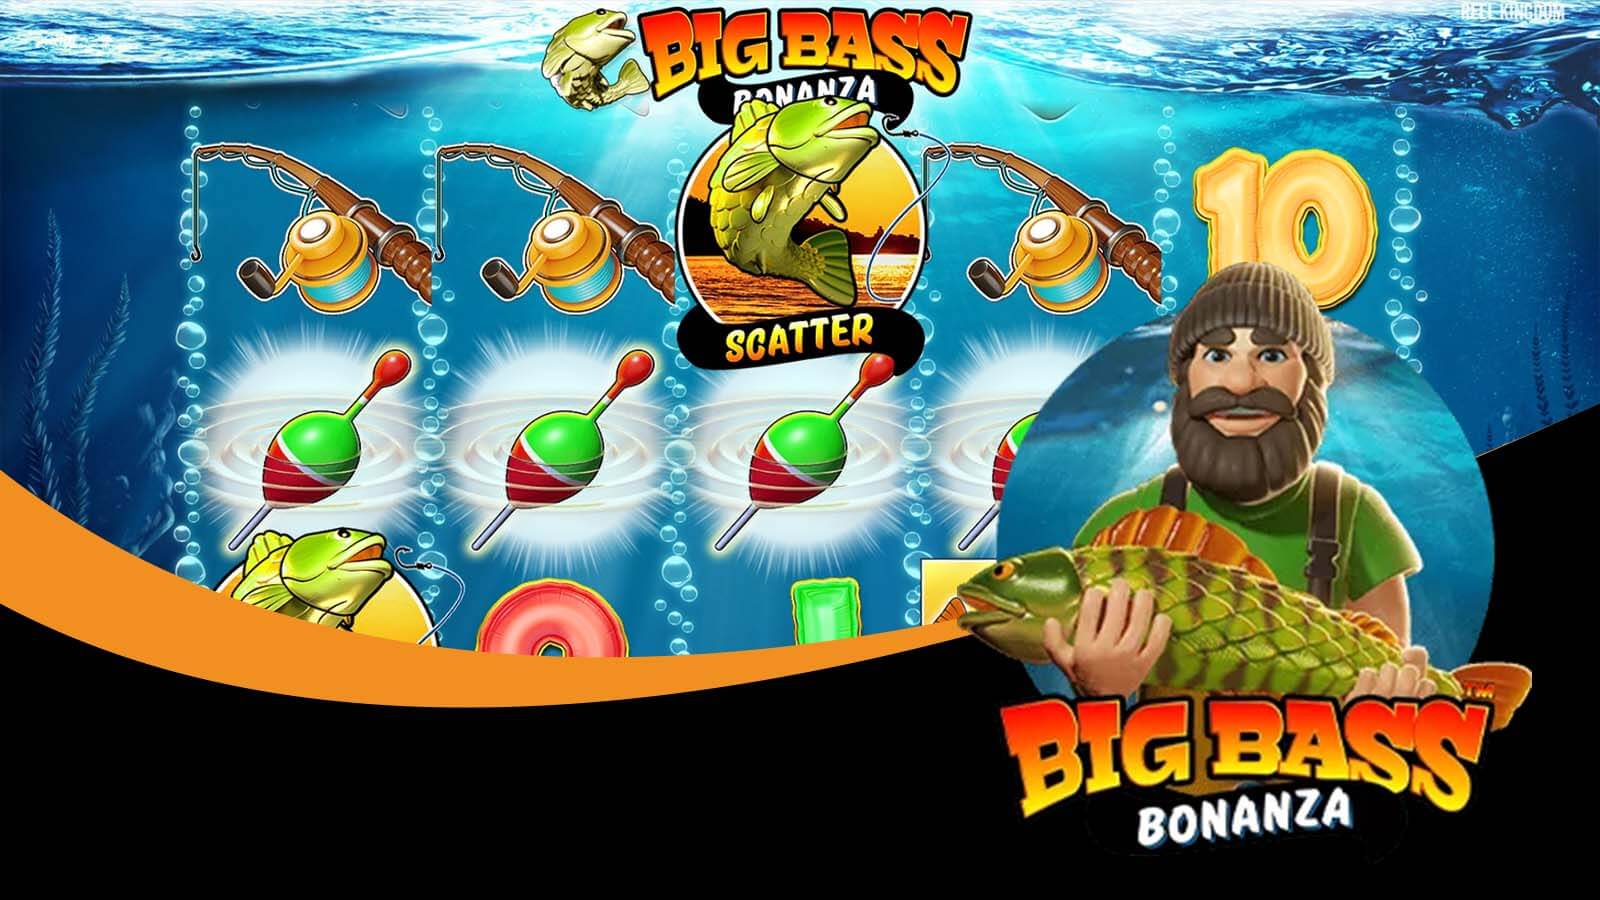 Big Bass Bonanza - The Big Catch